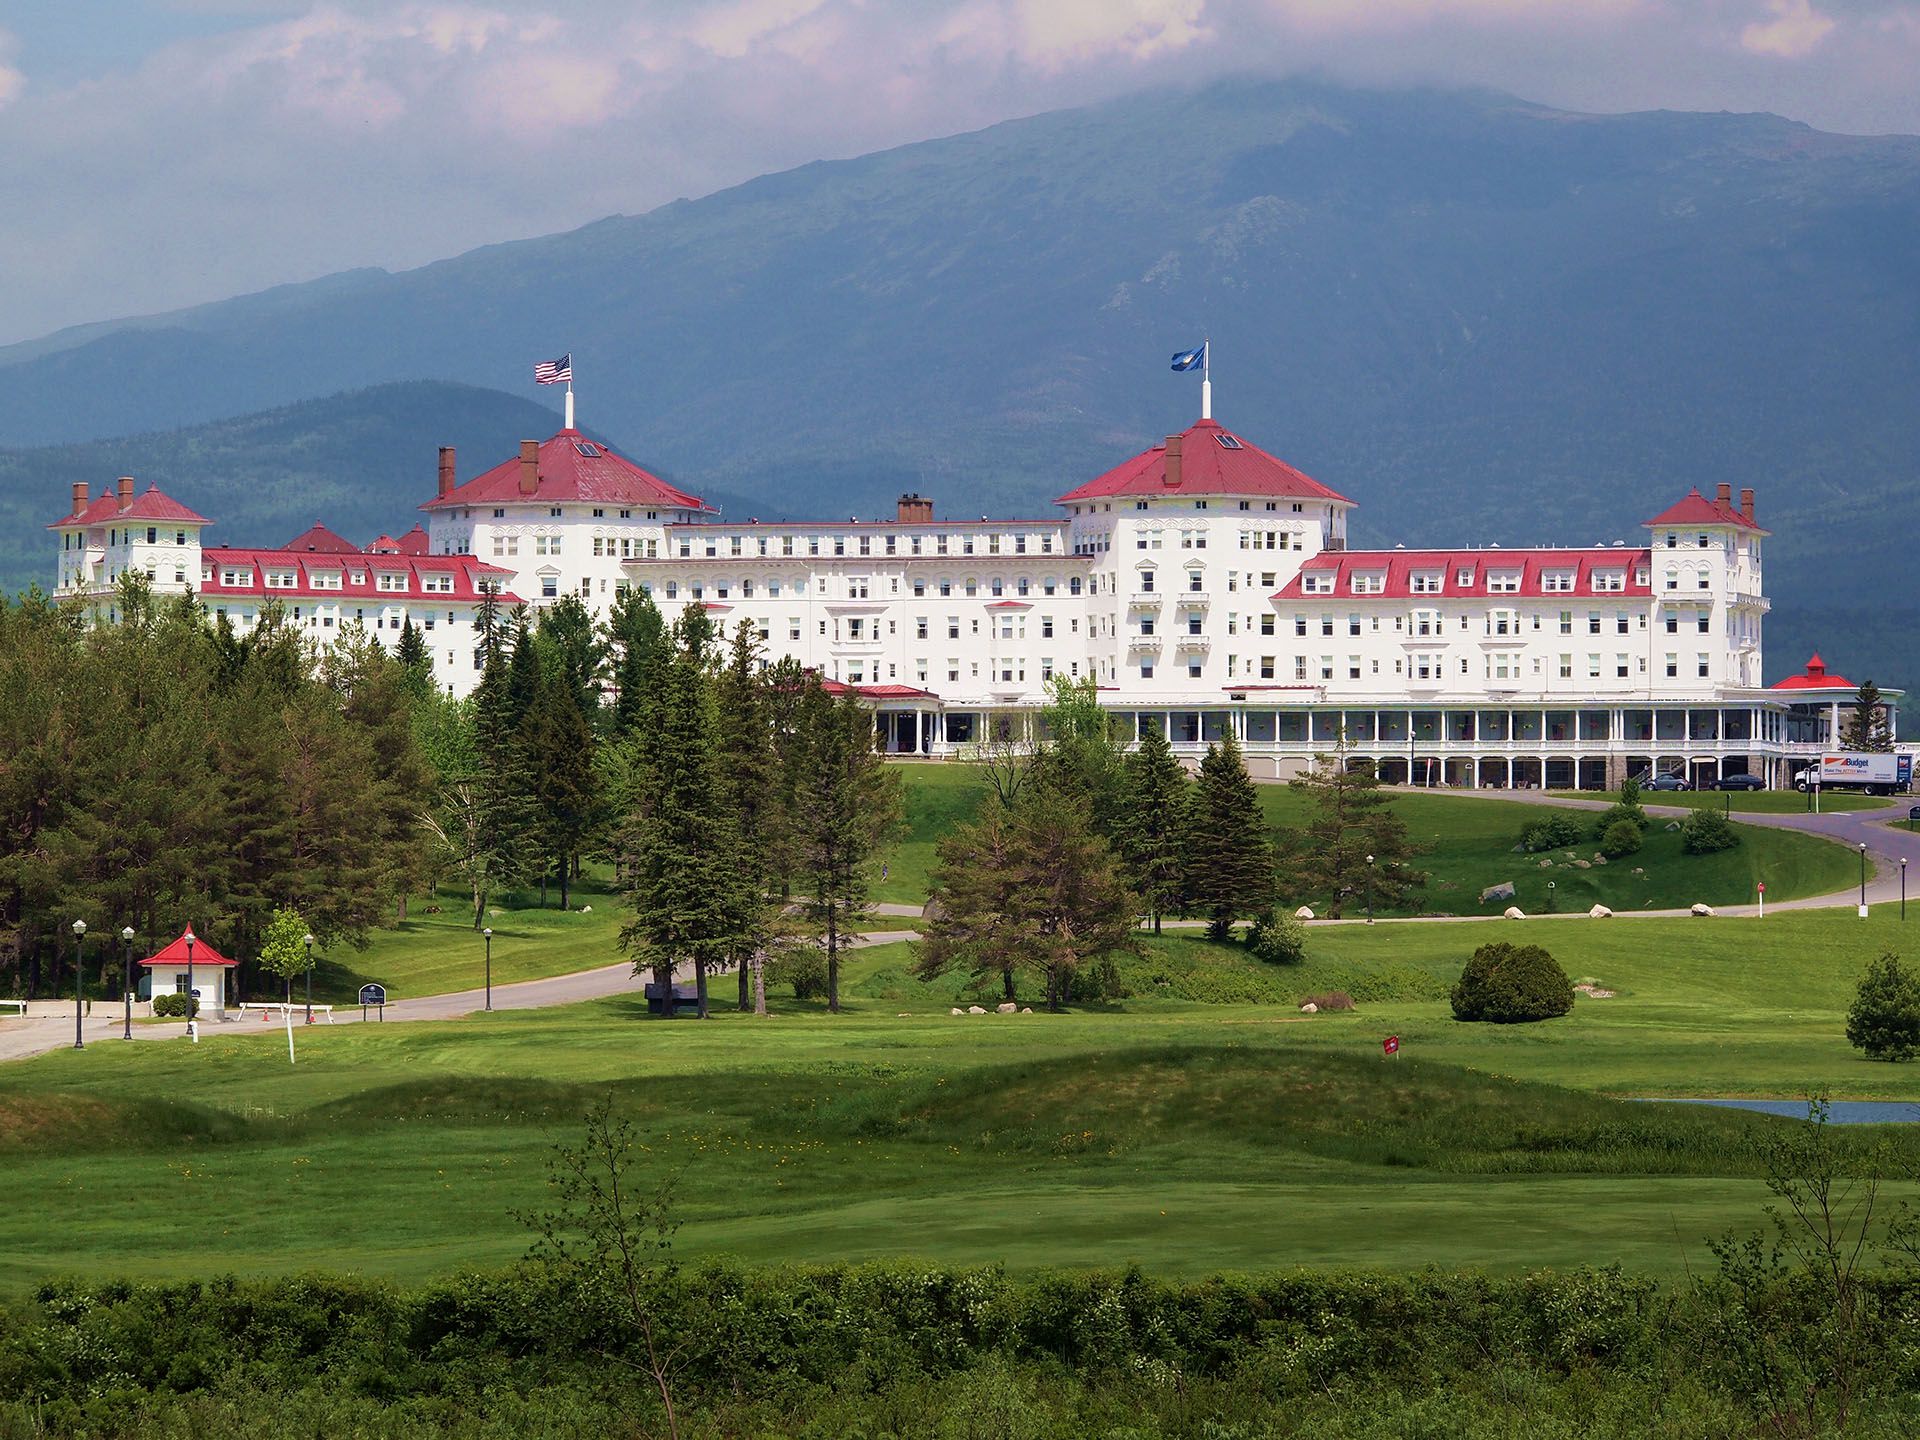 El Hotel Mount Washington, en Bretton Woods, New Hampshire